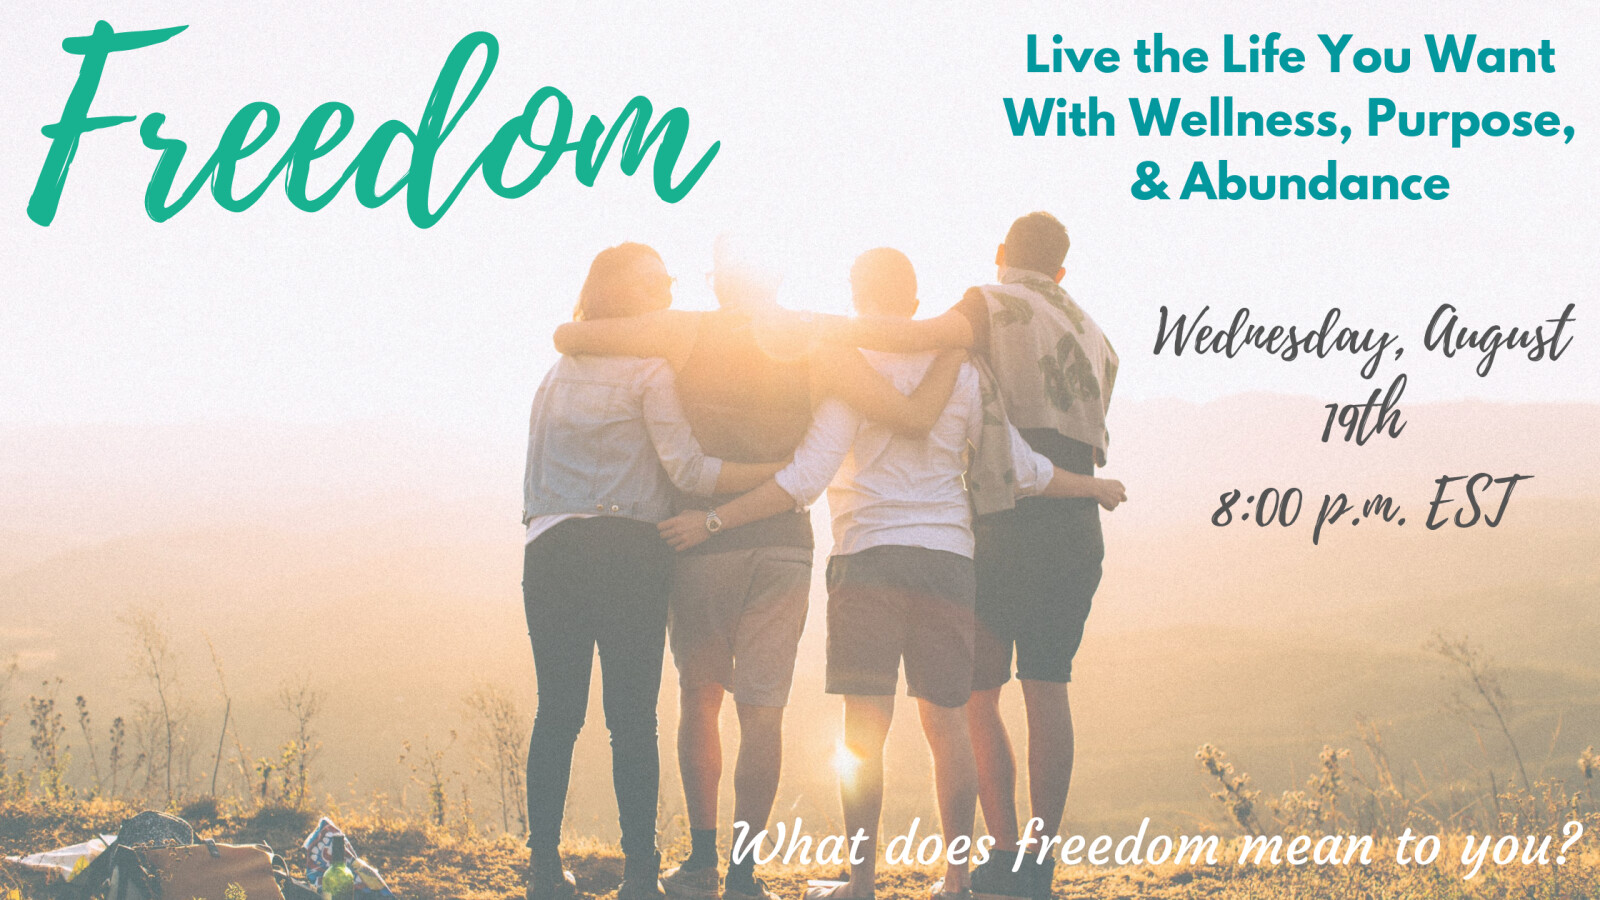 Freedom: Live the Life You Want With Wellness, Purpose, & Abundance